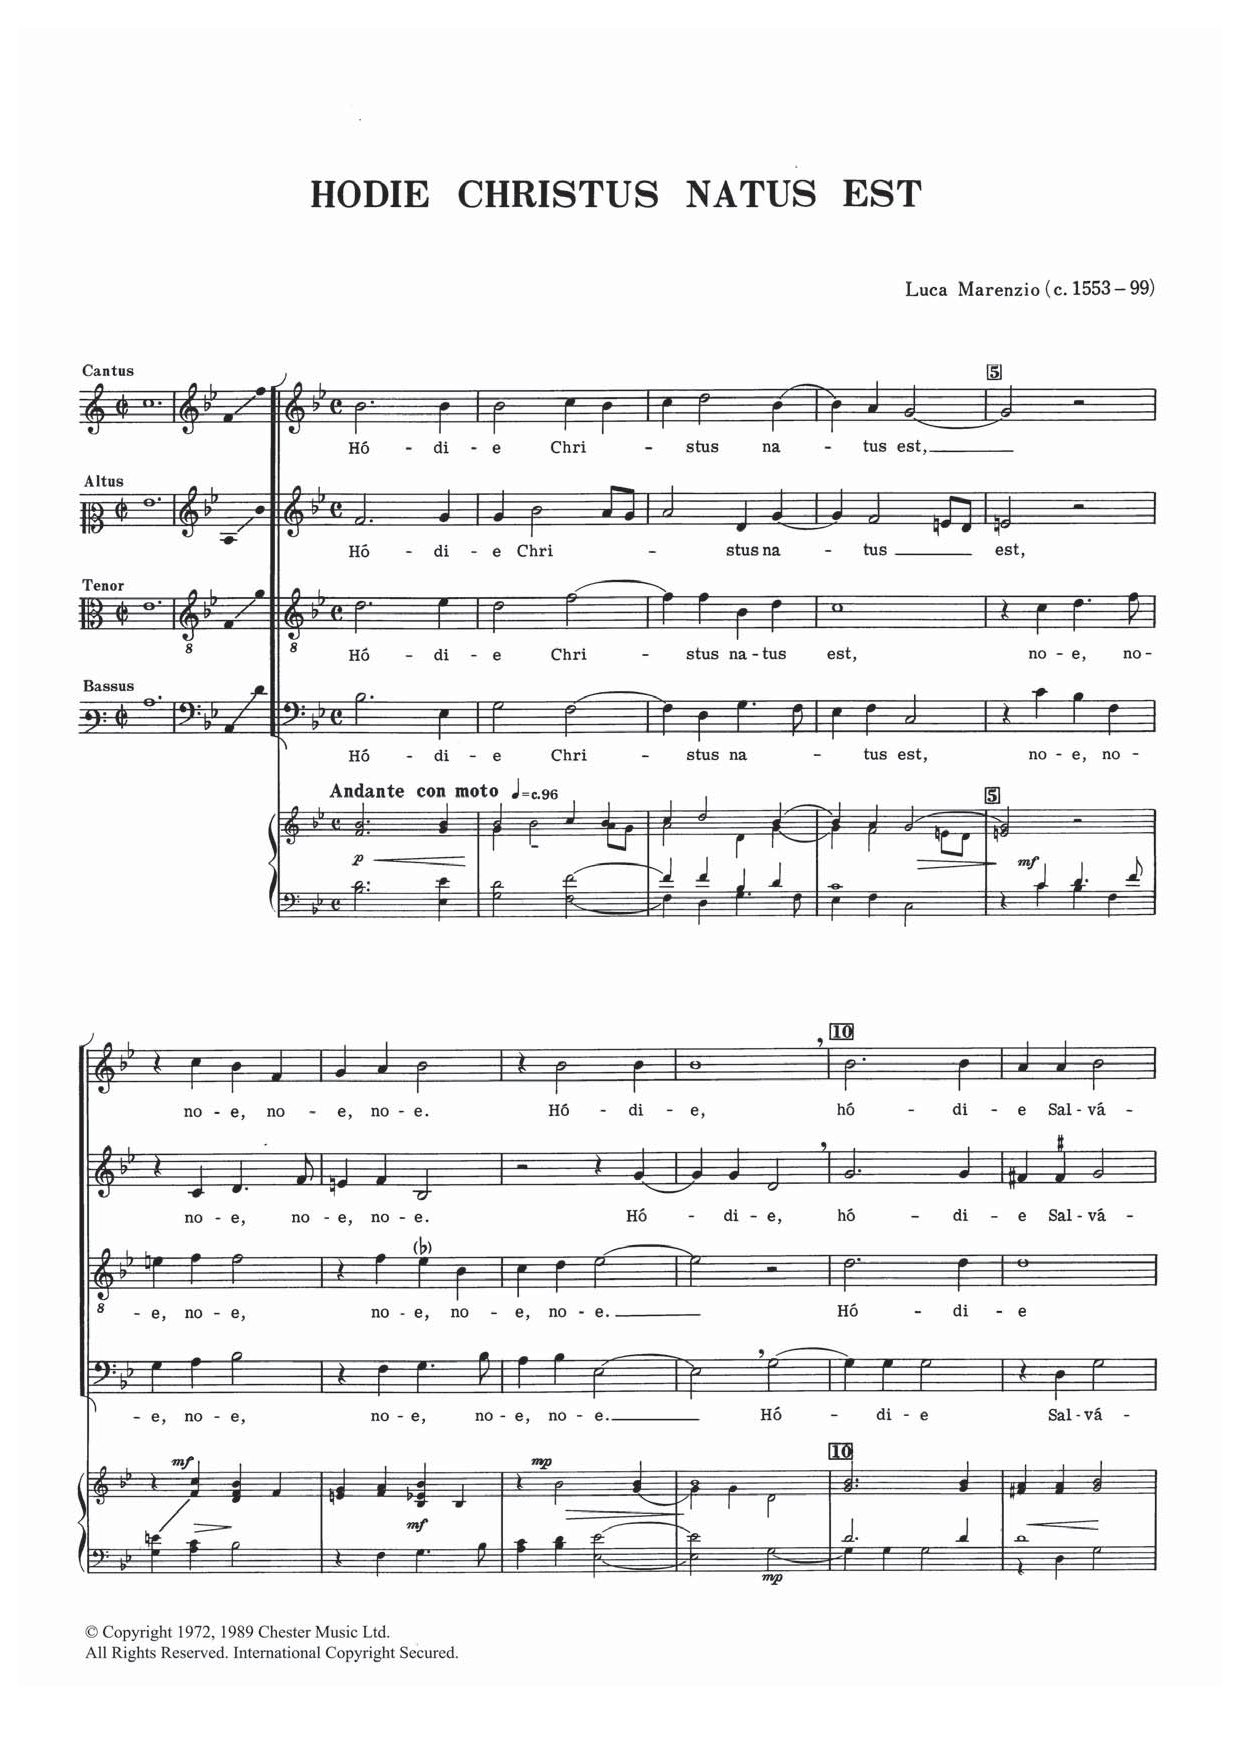 Luca Marenzio Hodie Christus Natus Est sheet music notes and chords arranged for SATB Choir